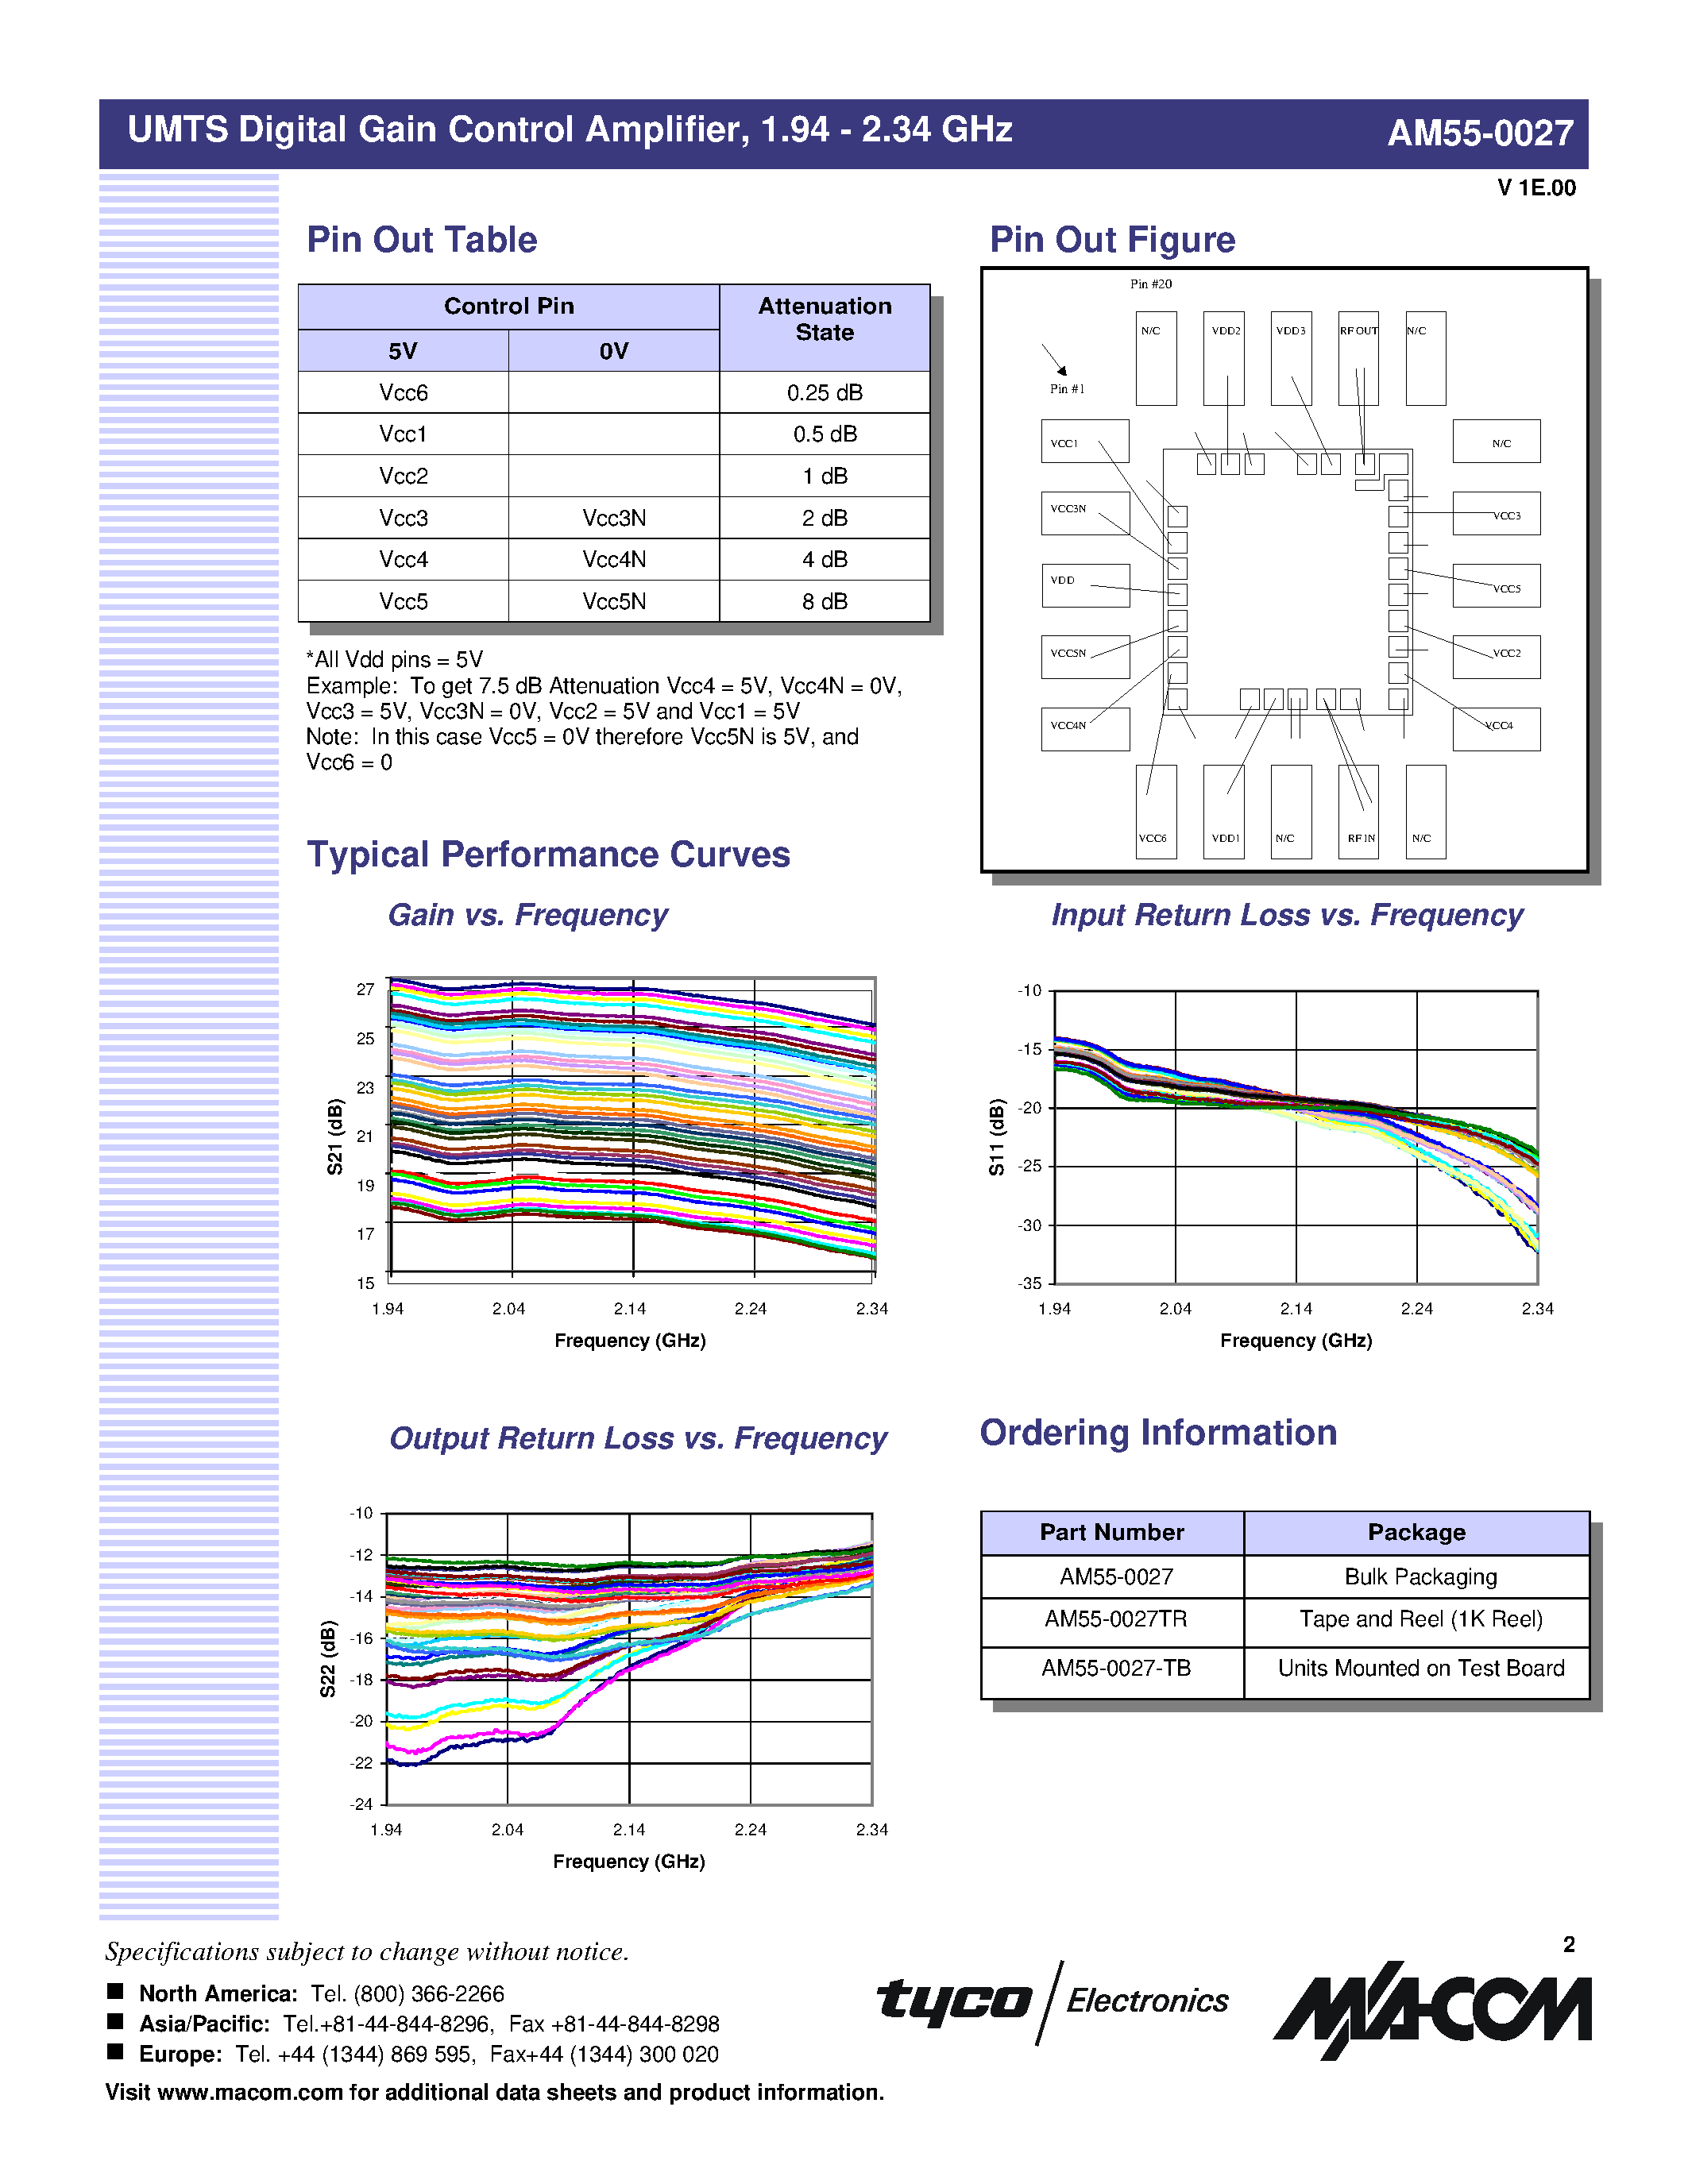 Datasheet AM55-0027-TB - UMTS Digital Gain Control Amplifier/ 1.94 - 2.34 GHz page 2